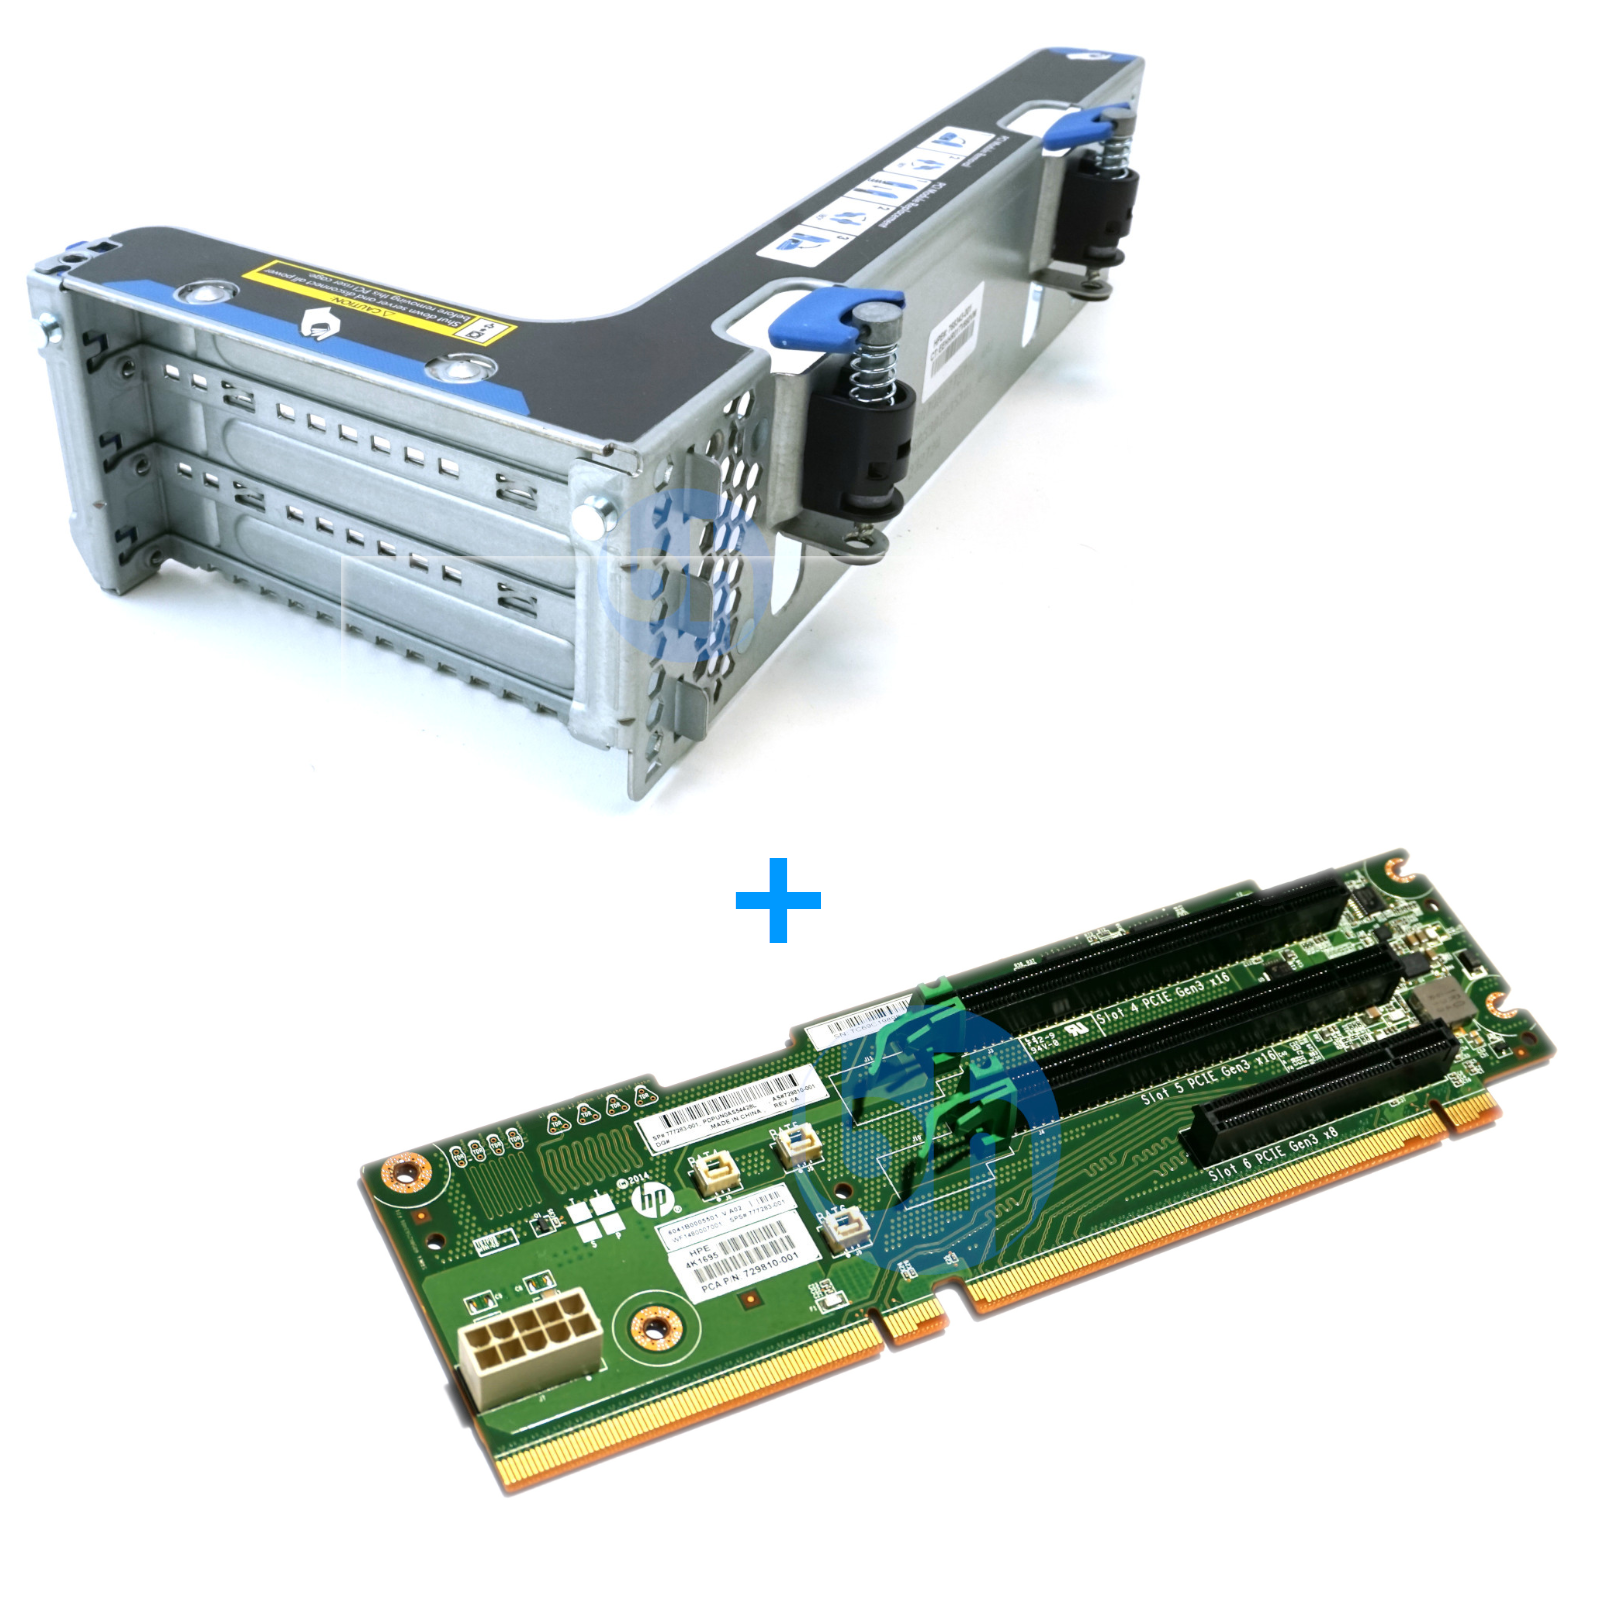 HP 777283-001 ProLiant DL380 Gen9 Secondary PCIe Riser Kit 768343-001